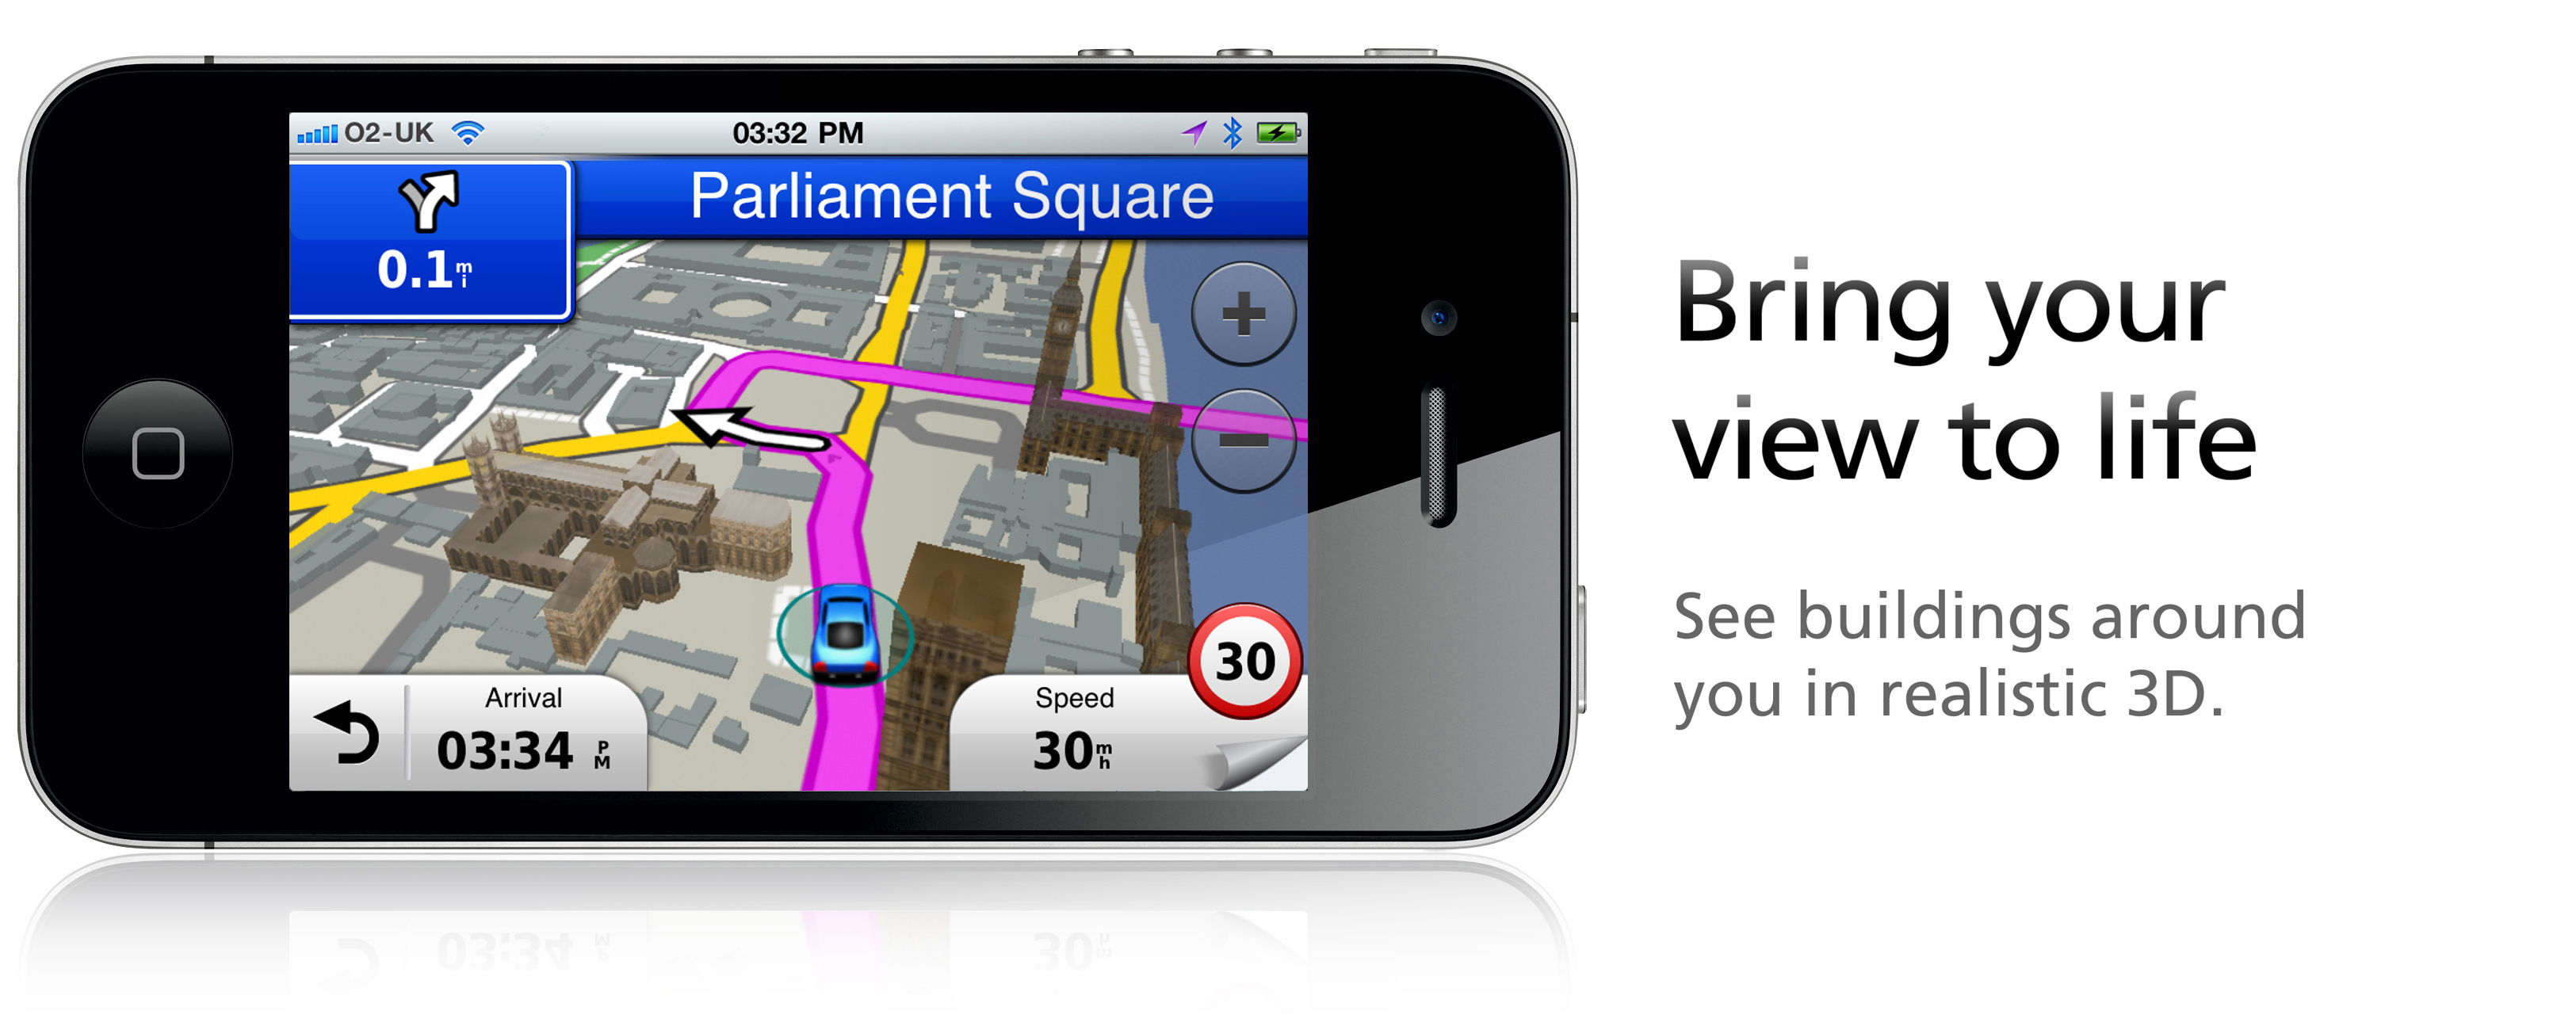 Garmin Navigation for iPhone has Arrived -